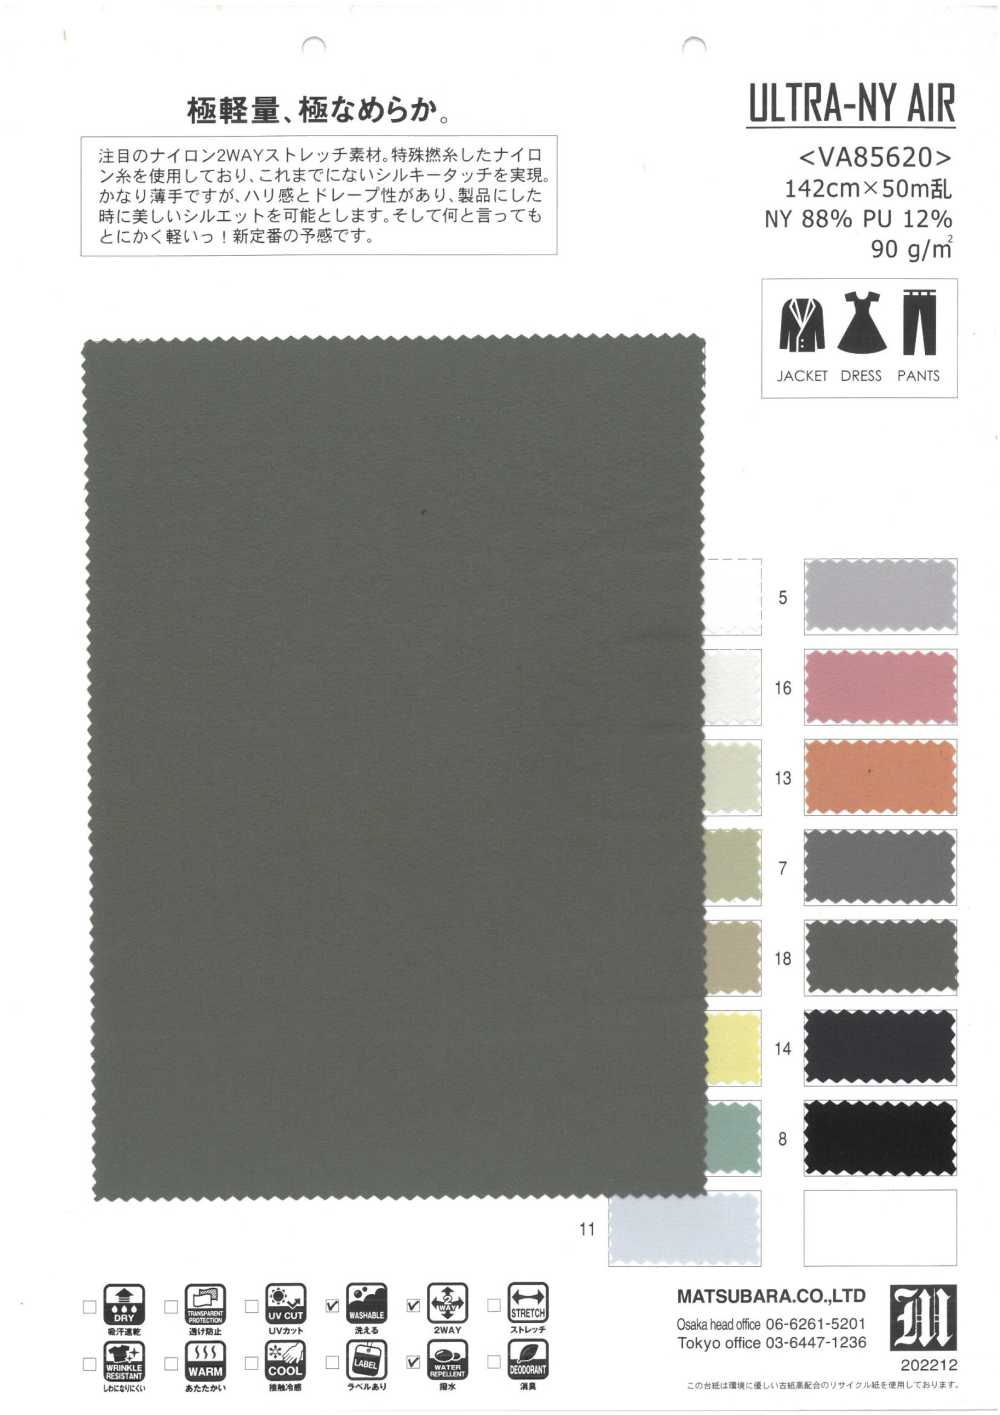 VA85620 ULTRA-NY AIR[Textile / Fabric] Matsubara